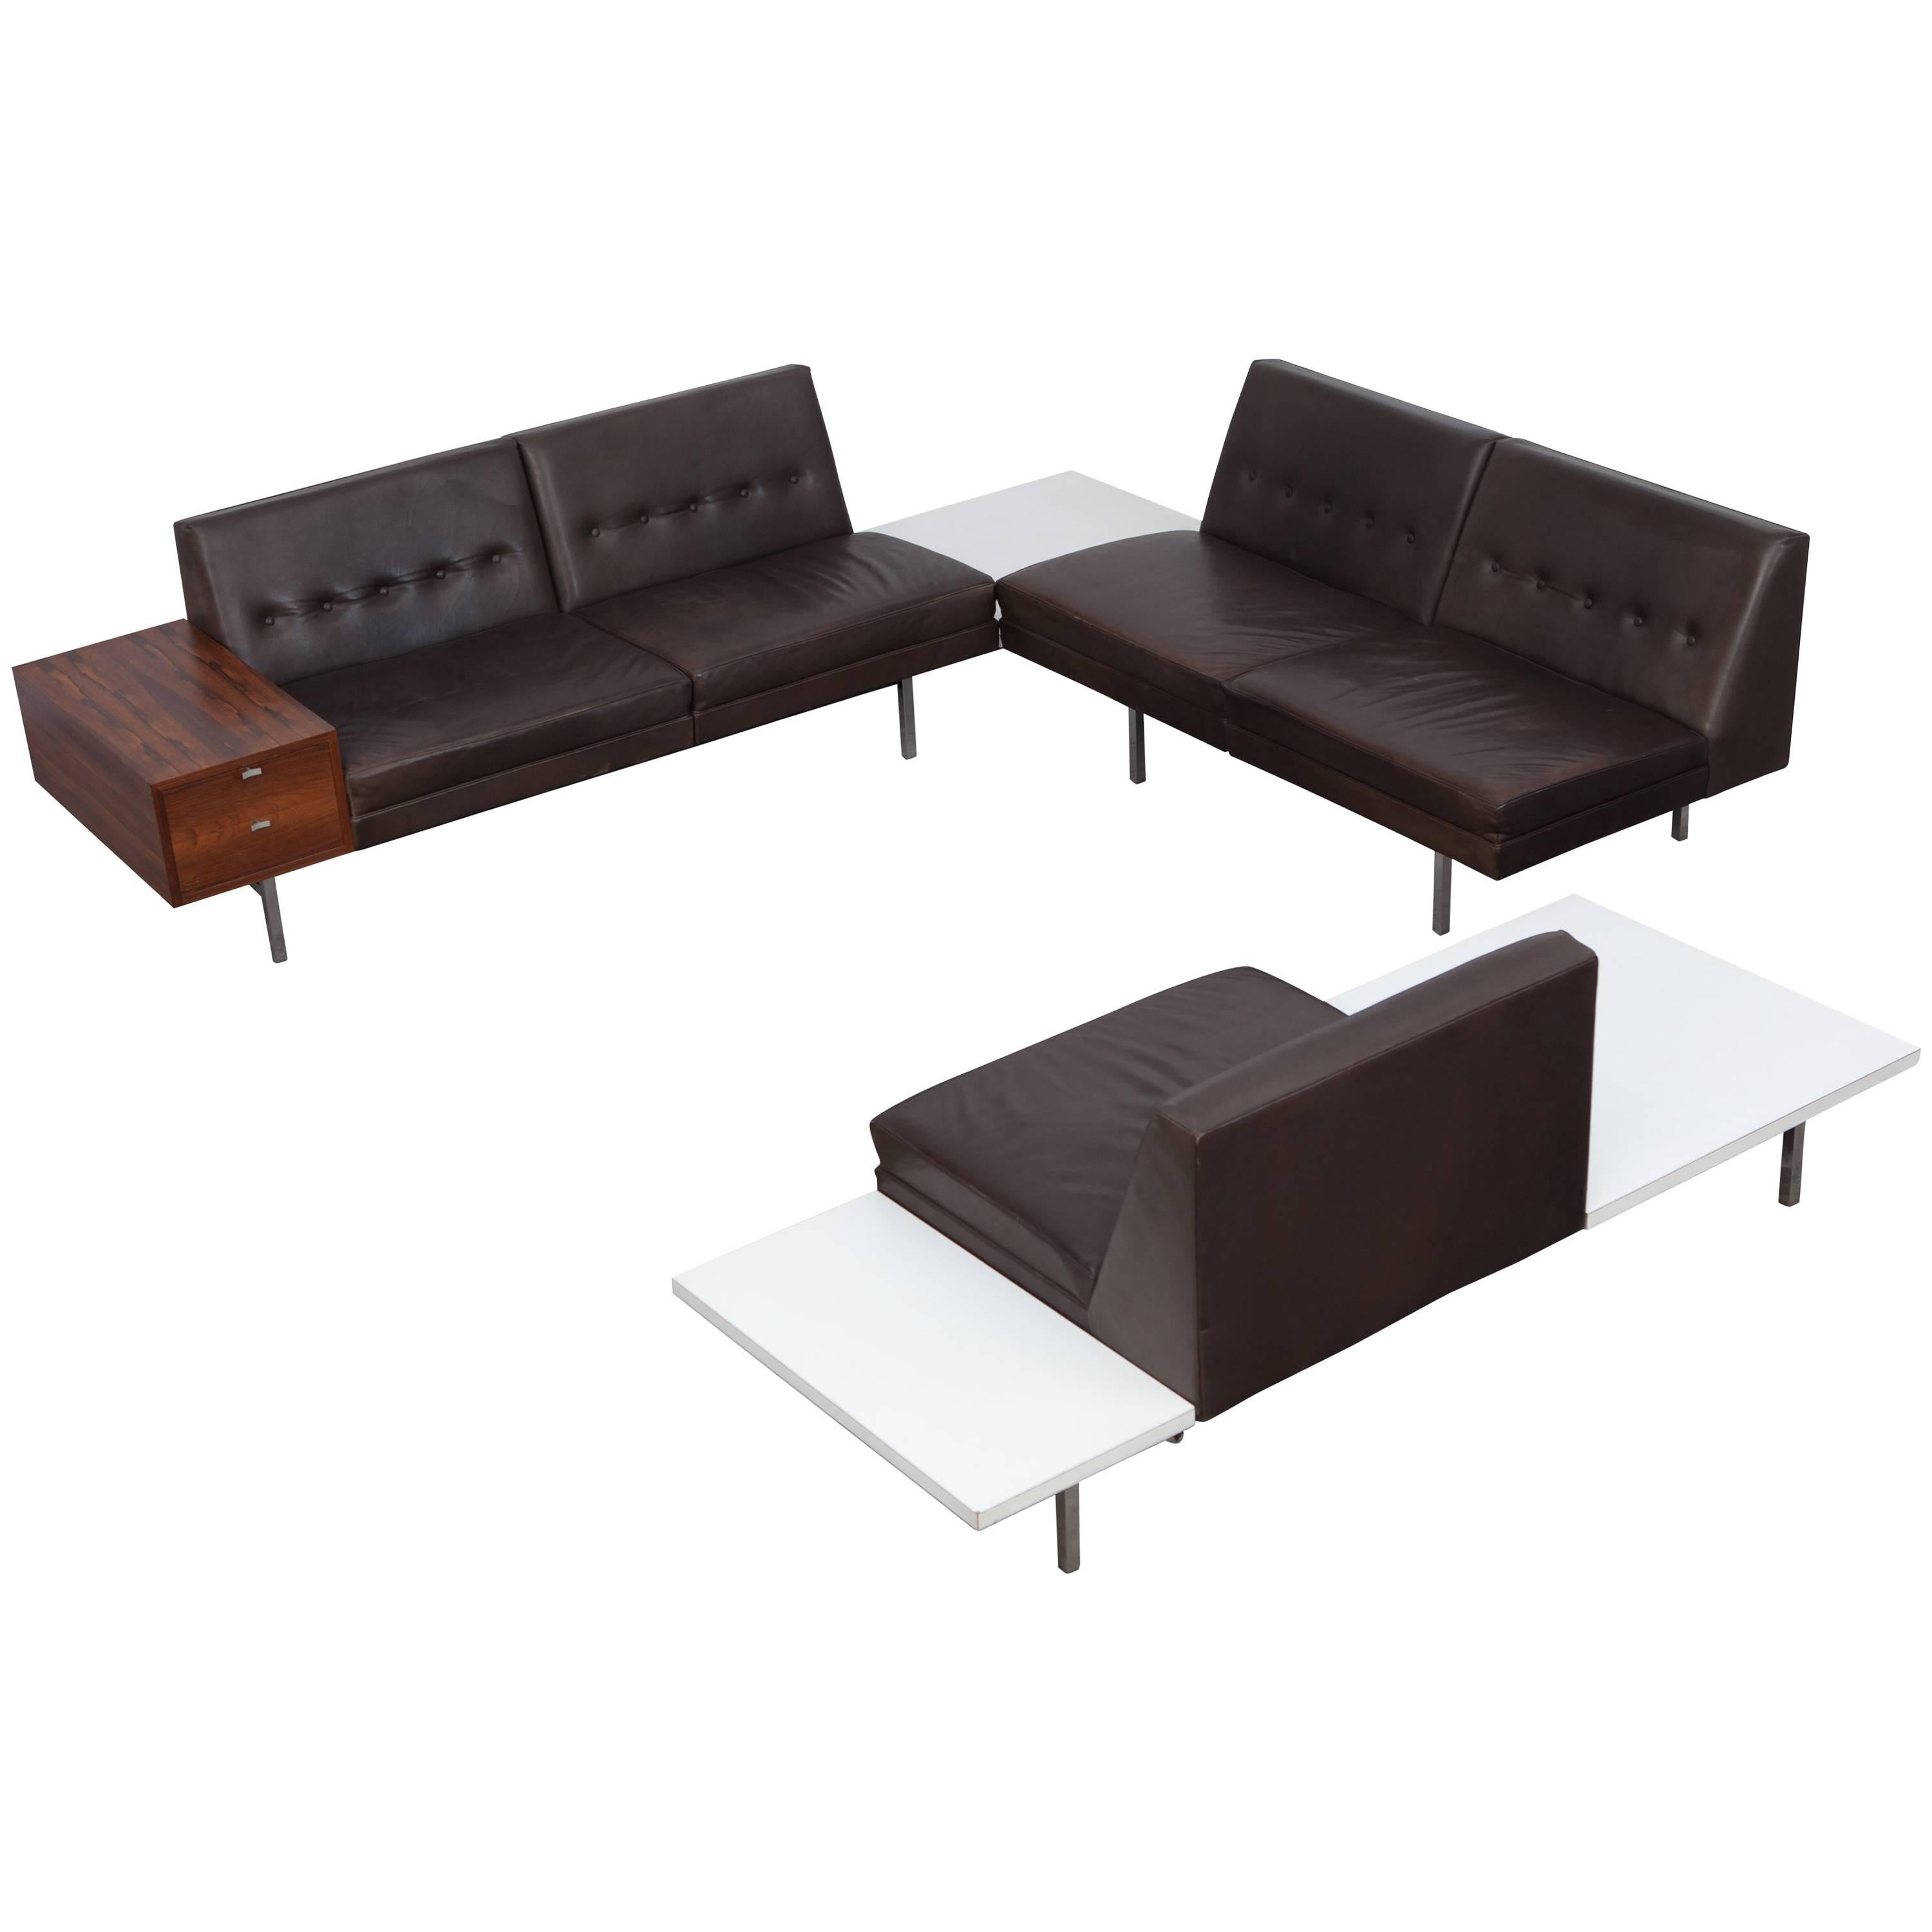 George Nelson Modular Sofa in Dark Leather for Herman Miller